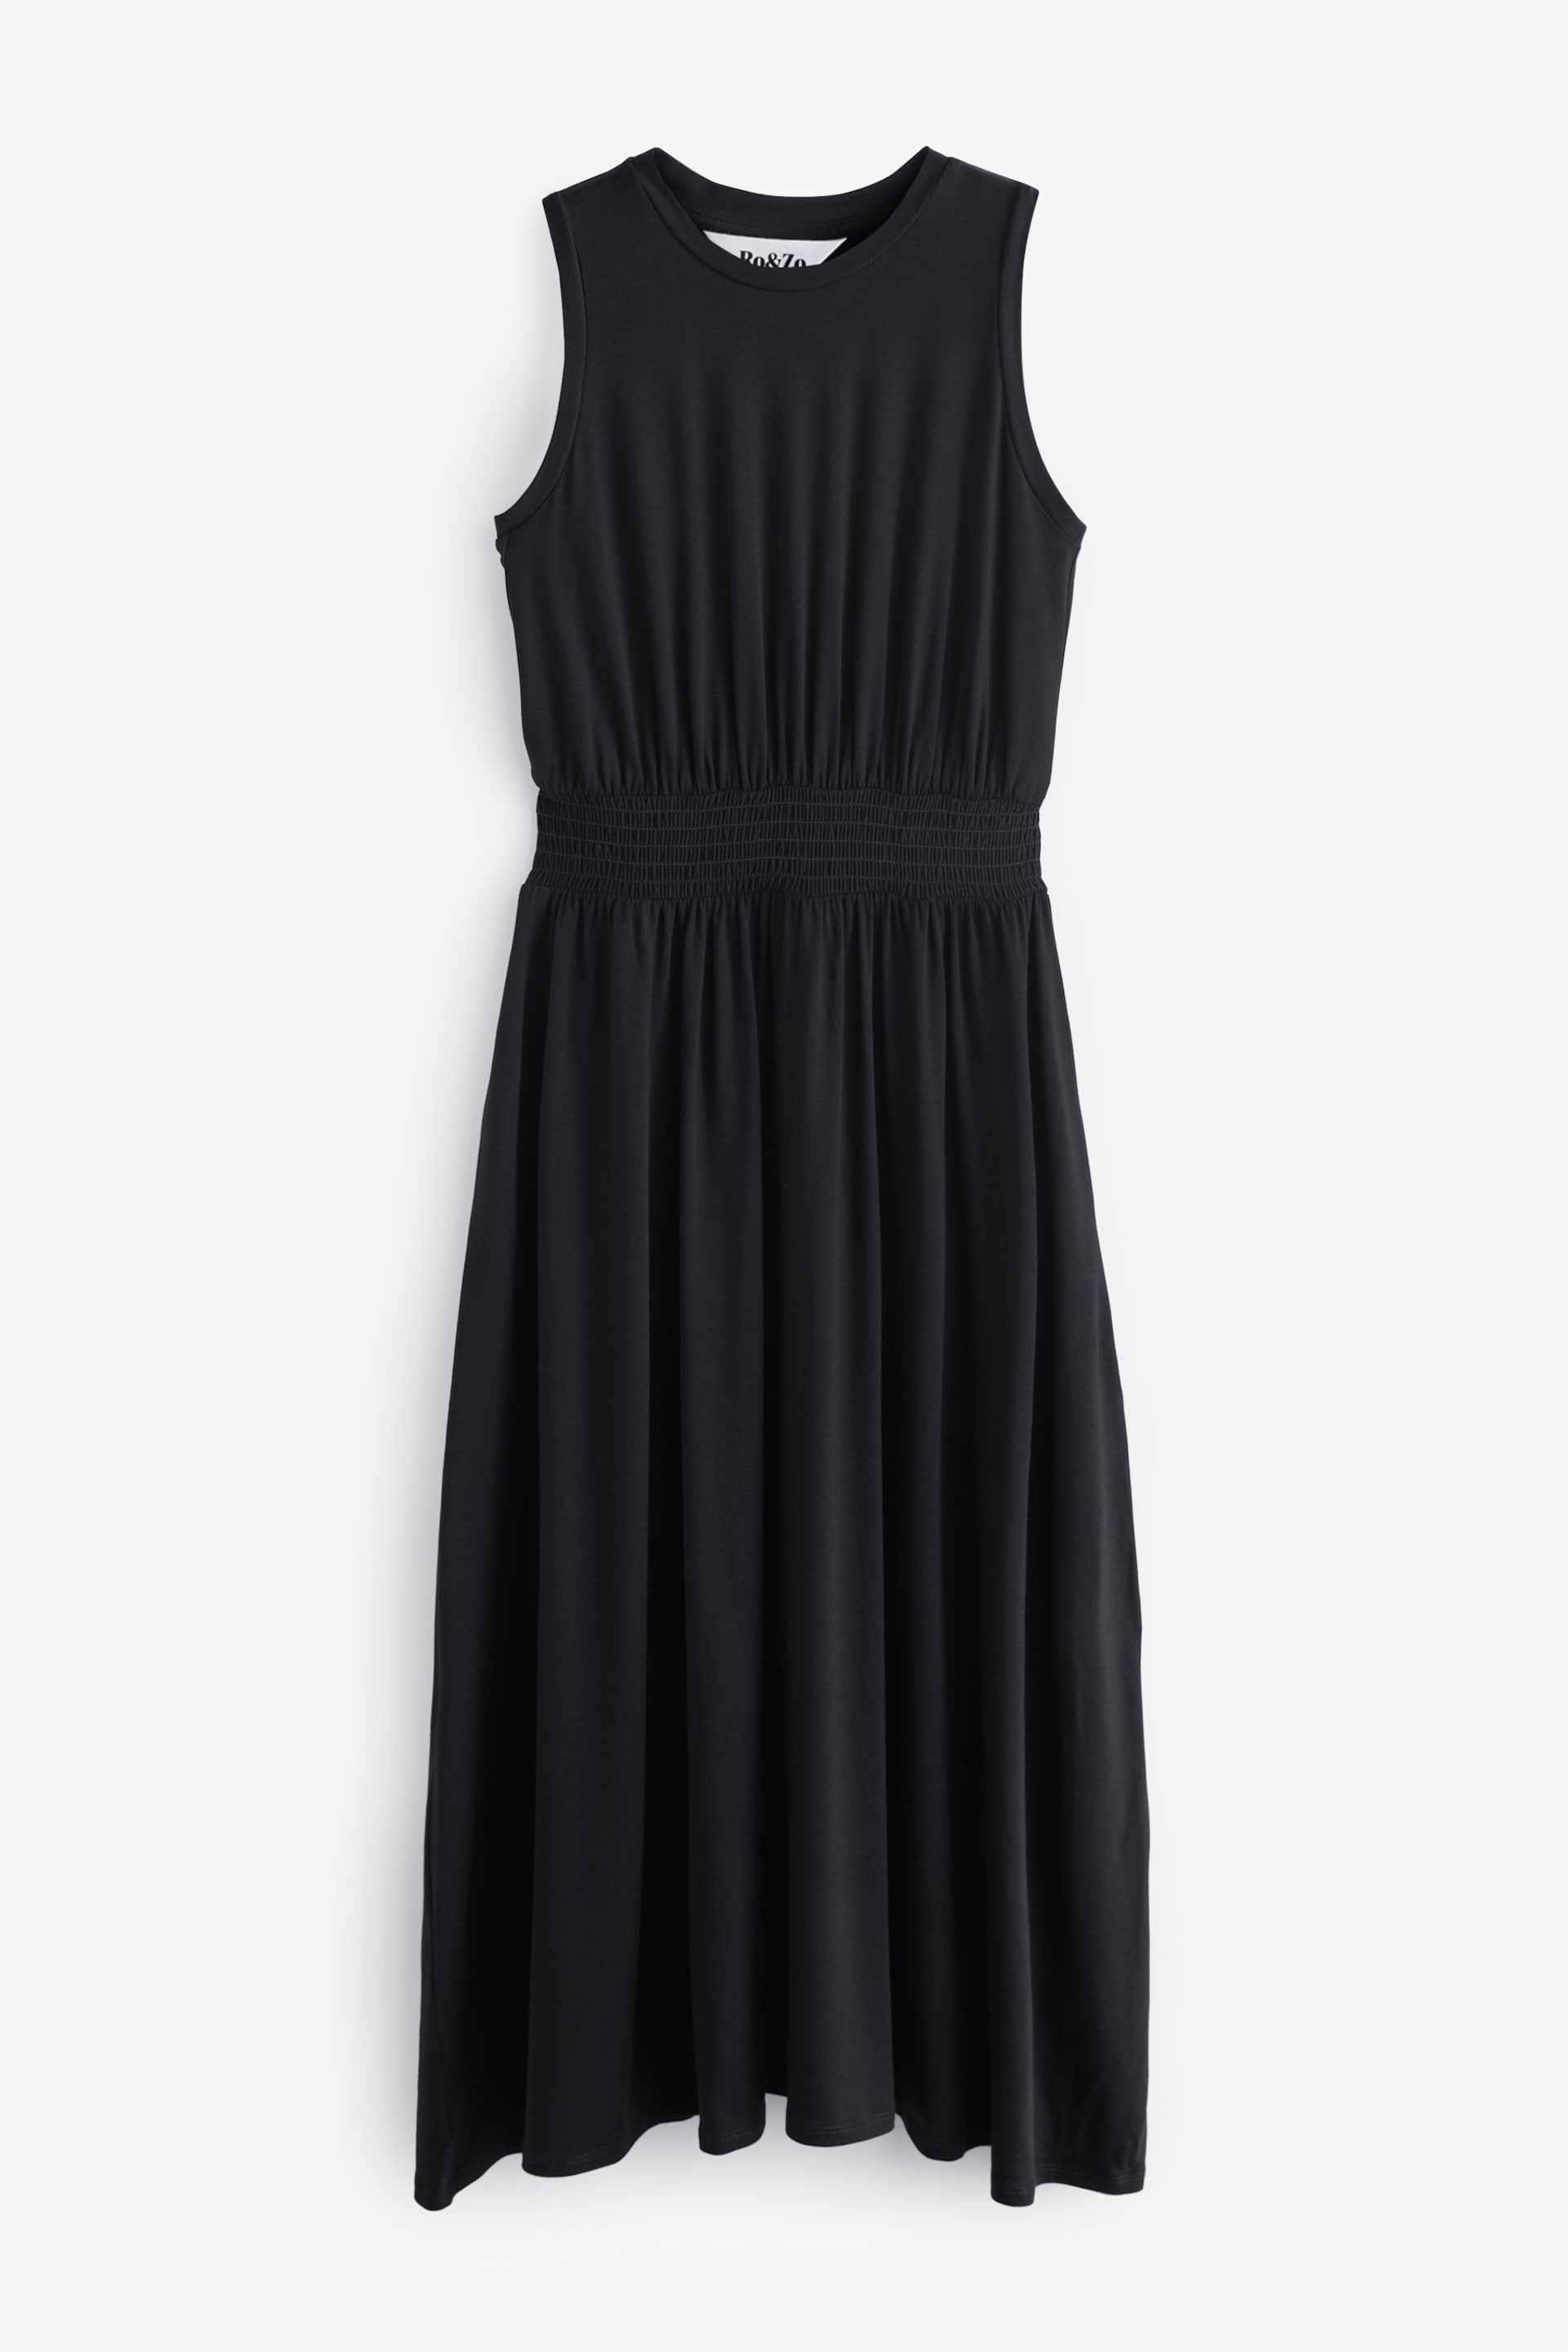 Ro&Zo Jersey Shirred Waistband Black Dress - Image 1 of 1